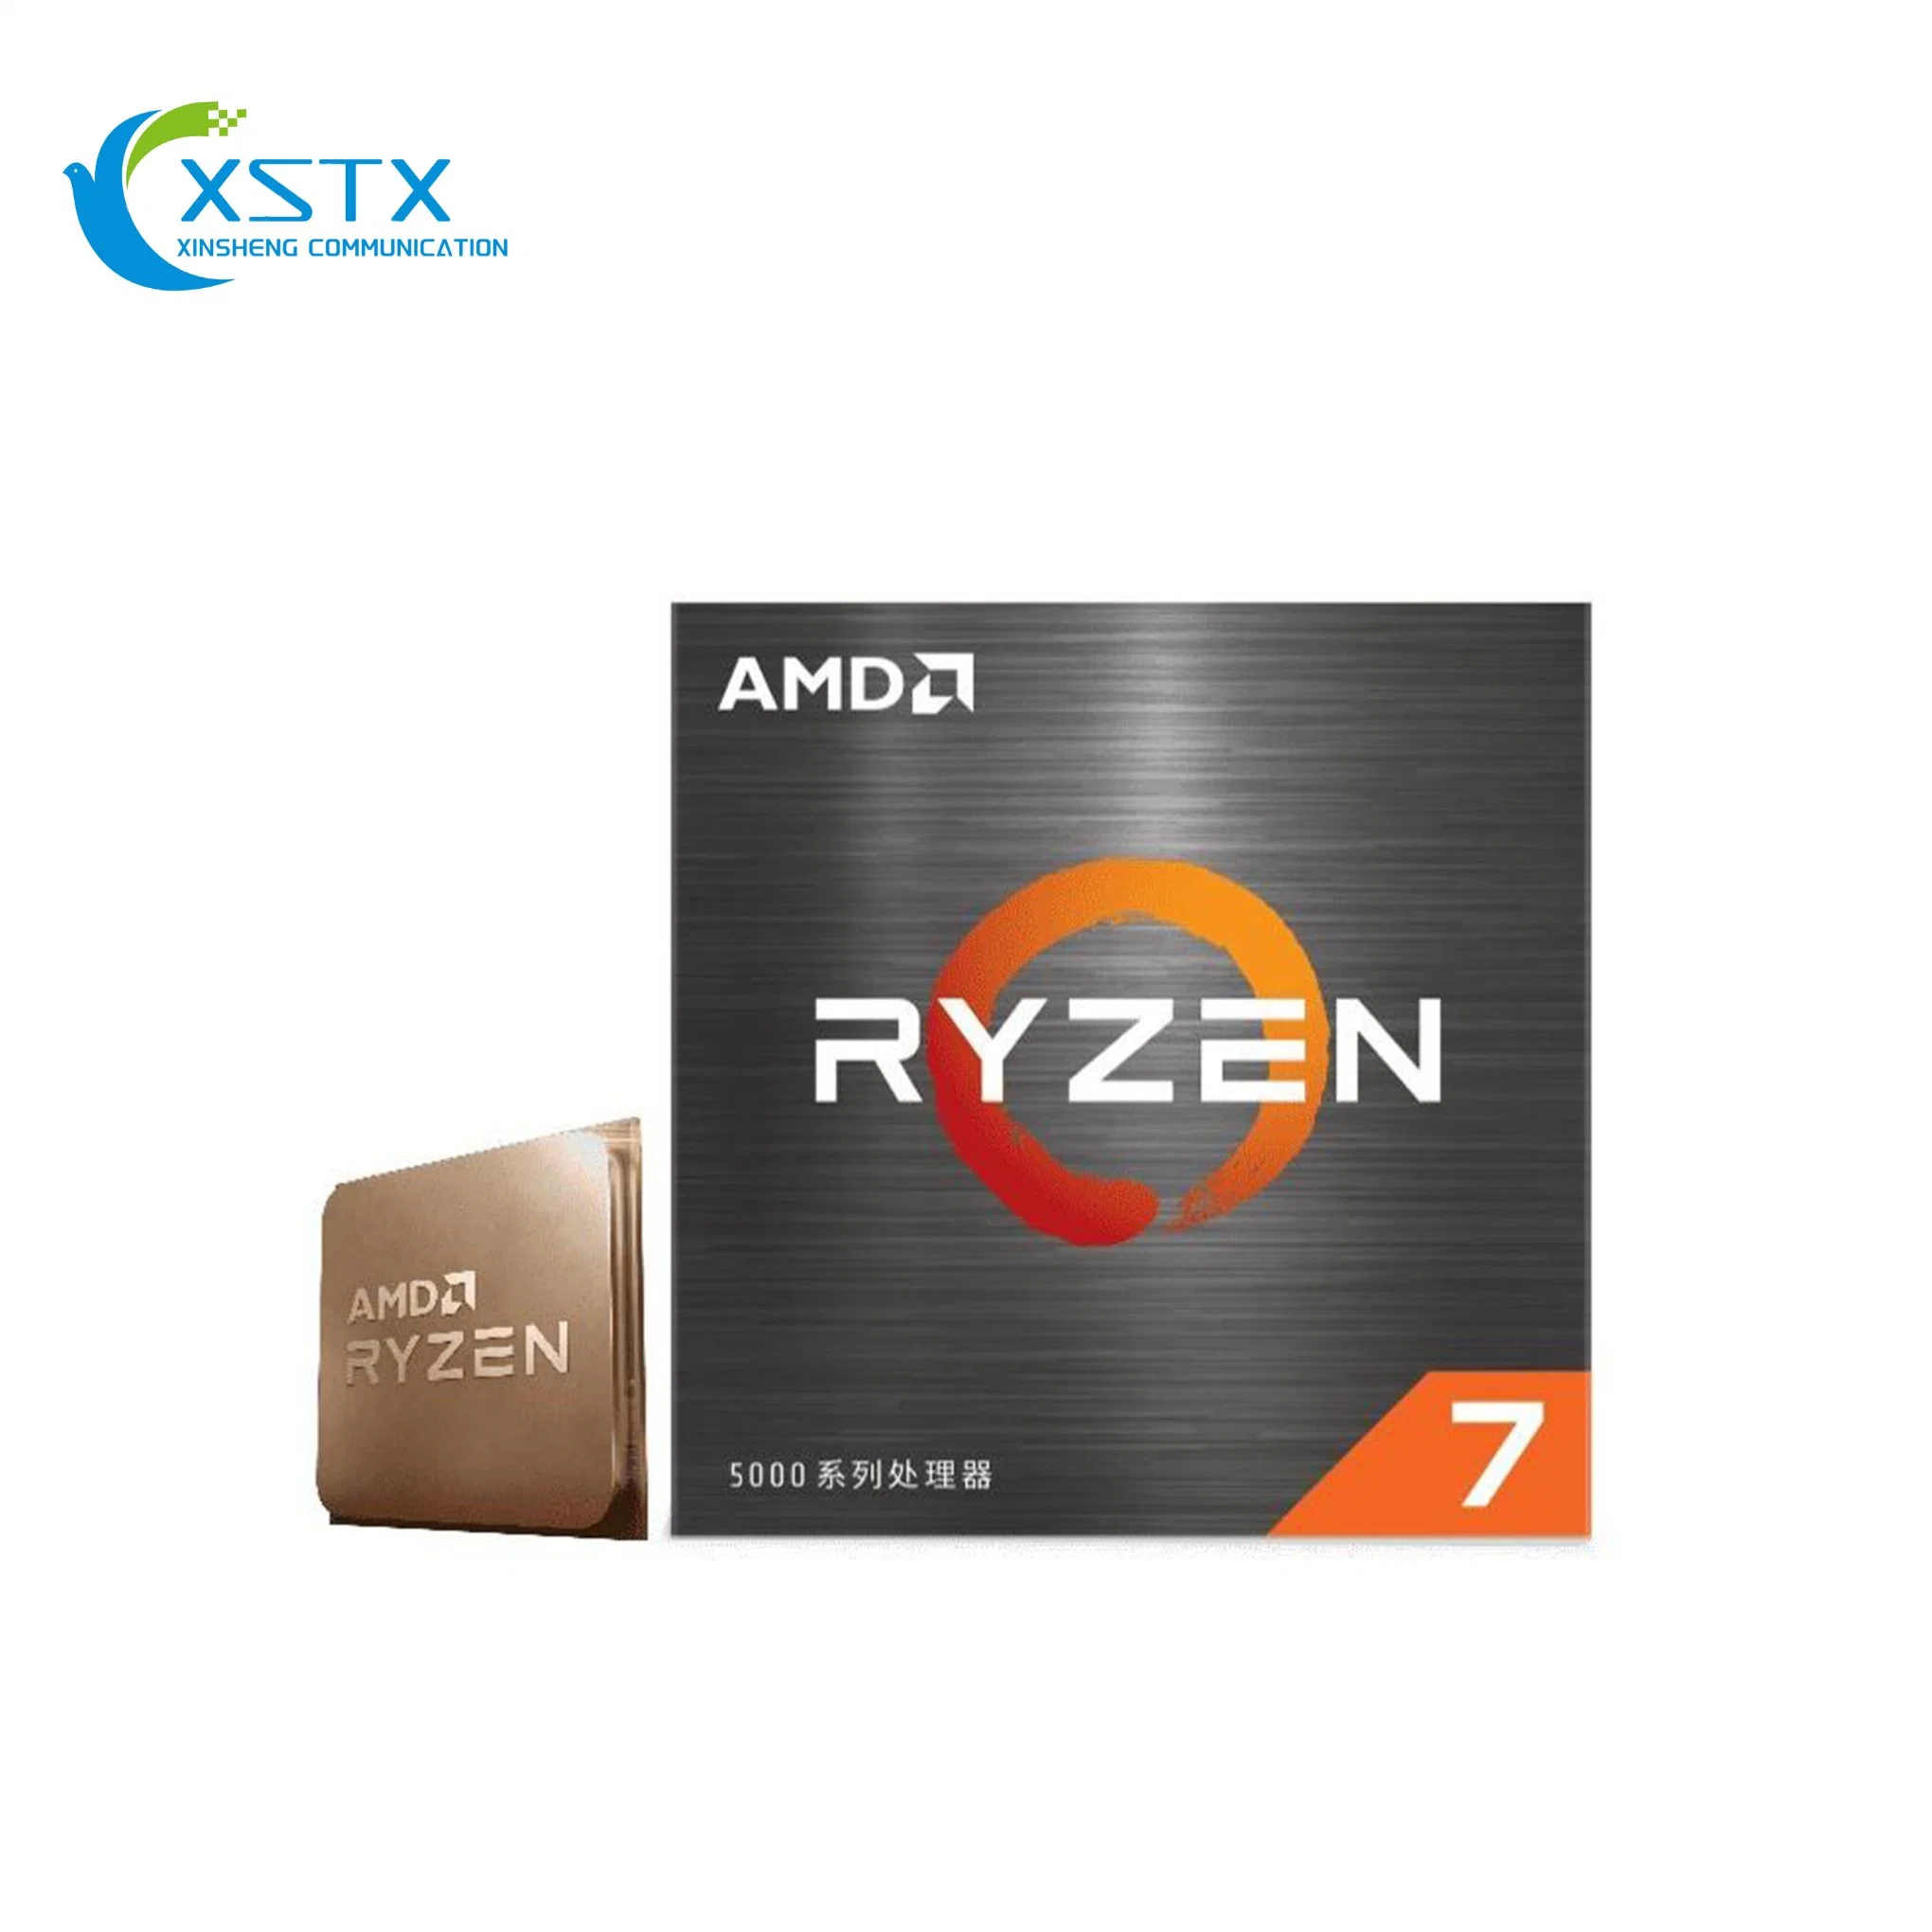 AMD CPU Ryzen 5 6core Computer Parts